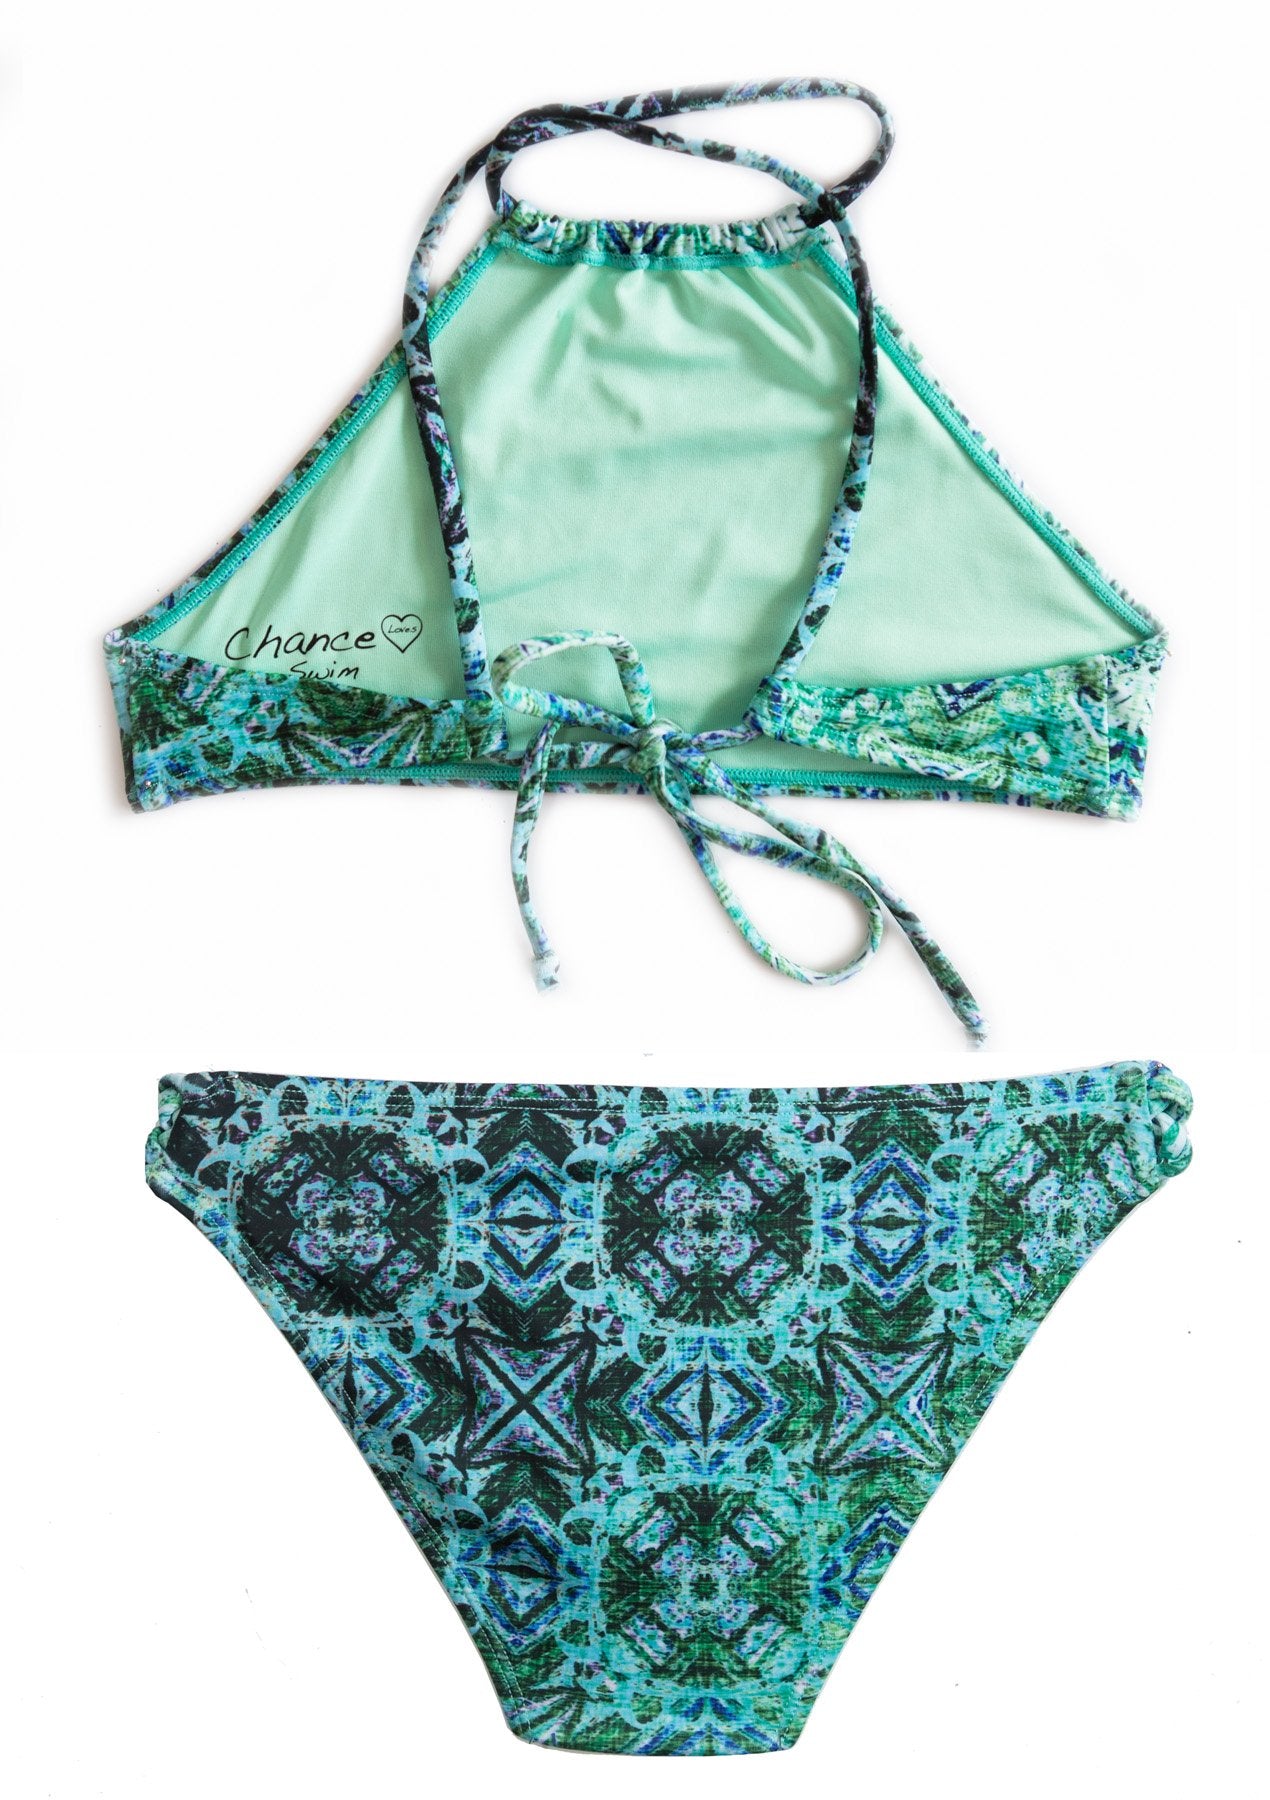 Moss Point Halter Top Tankini - Chance Loves Swimwear